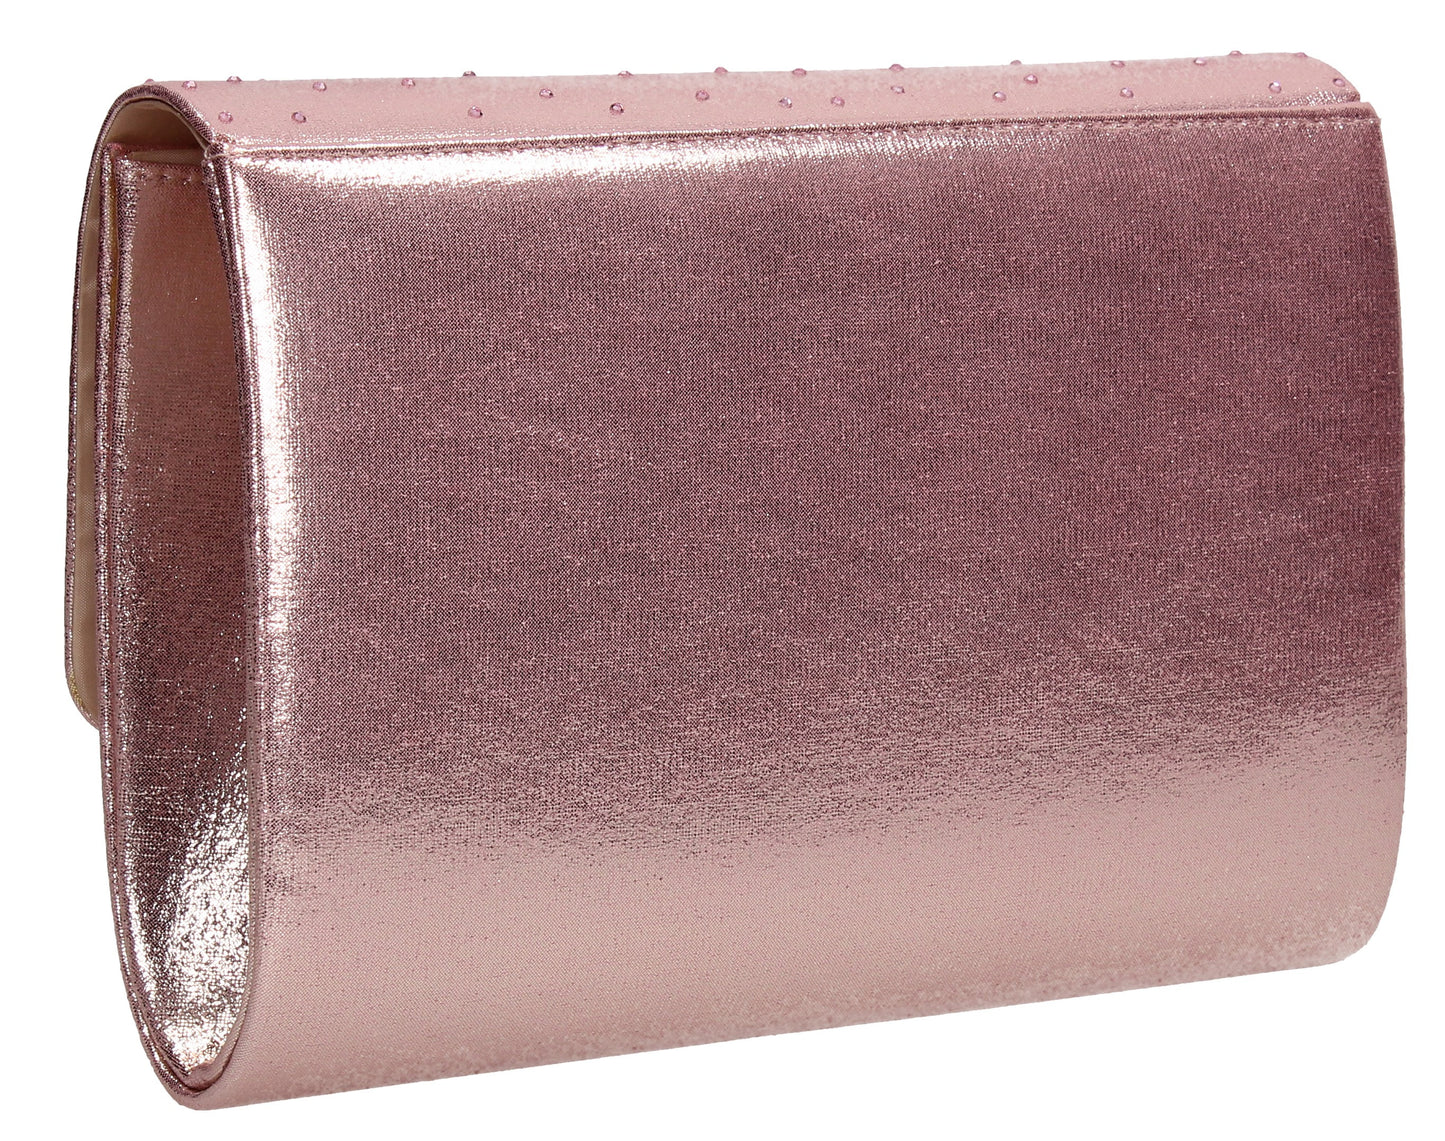 SWANKYSWANS Natalie Diamante Clutch Bag Pink Cute Cheap Clutch Bag For Weddings School and Work